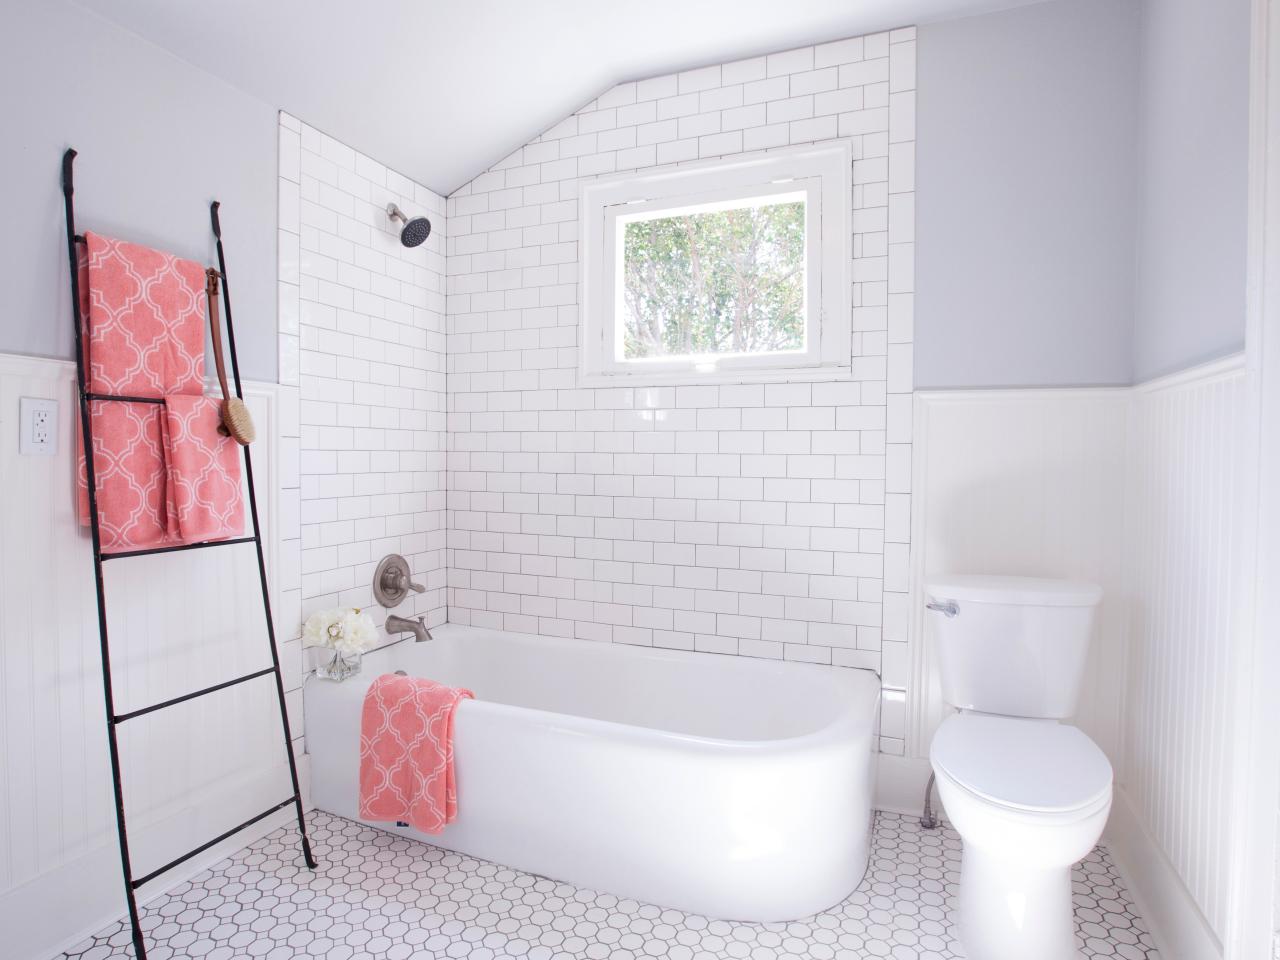 Ceramic Tile Flooring Tips Diy, How To Lay Ceramic Tile In Bathroom Wall